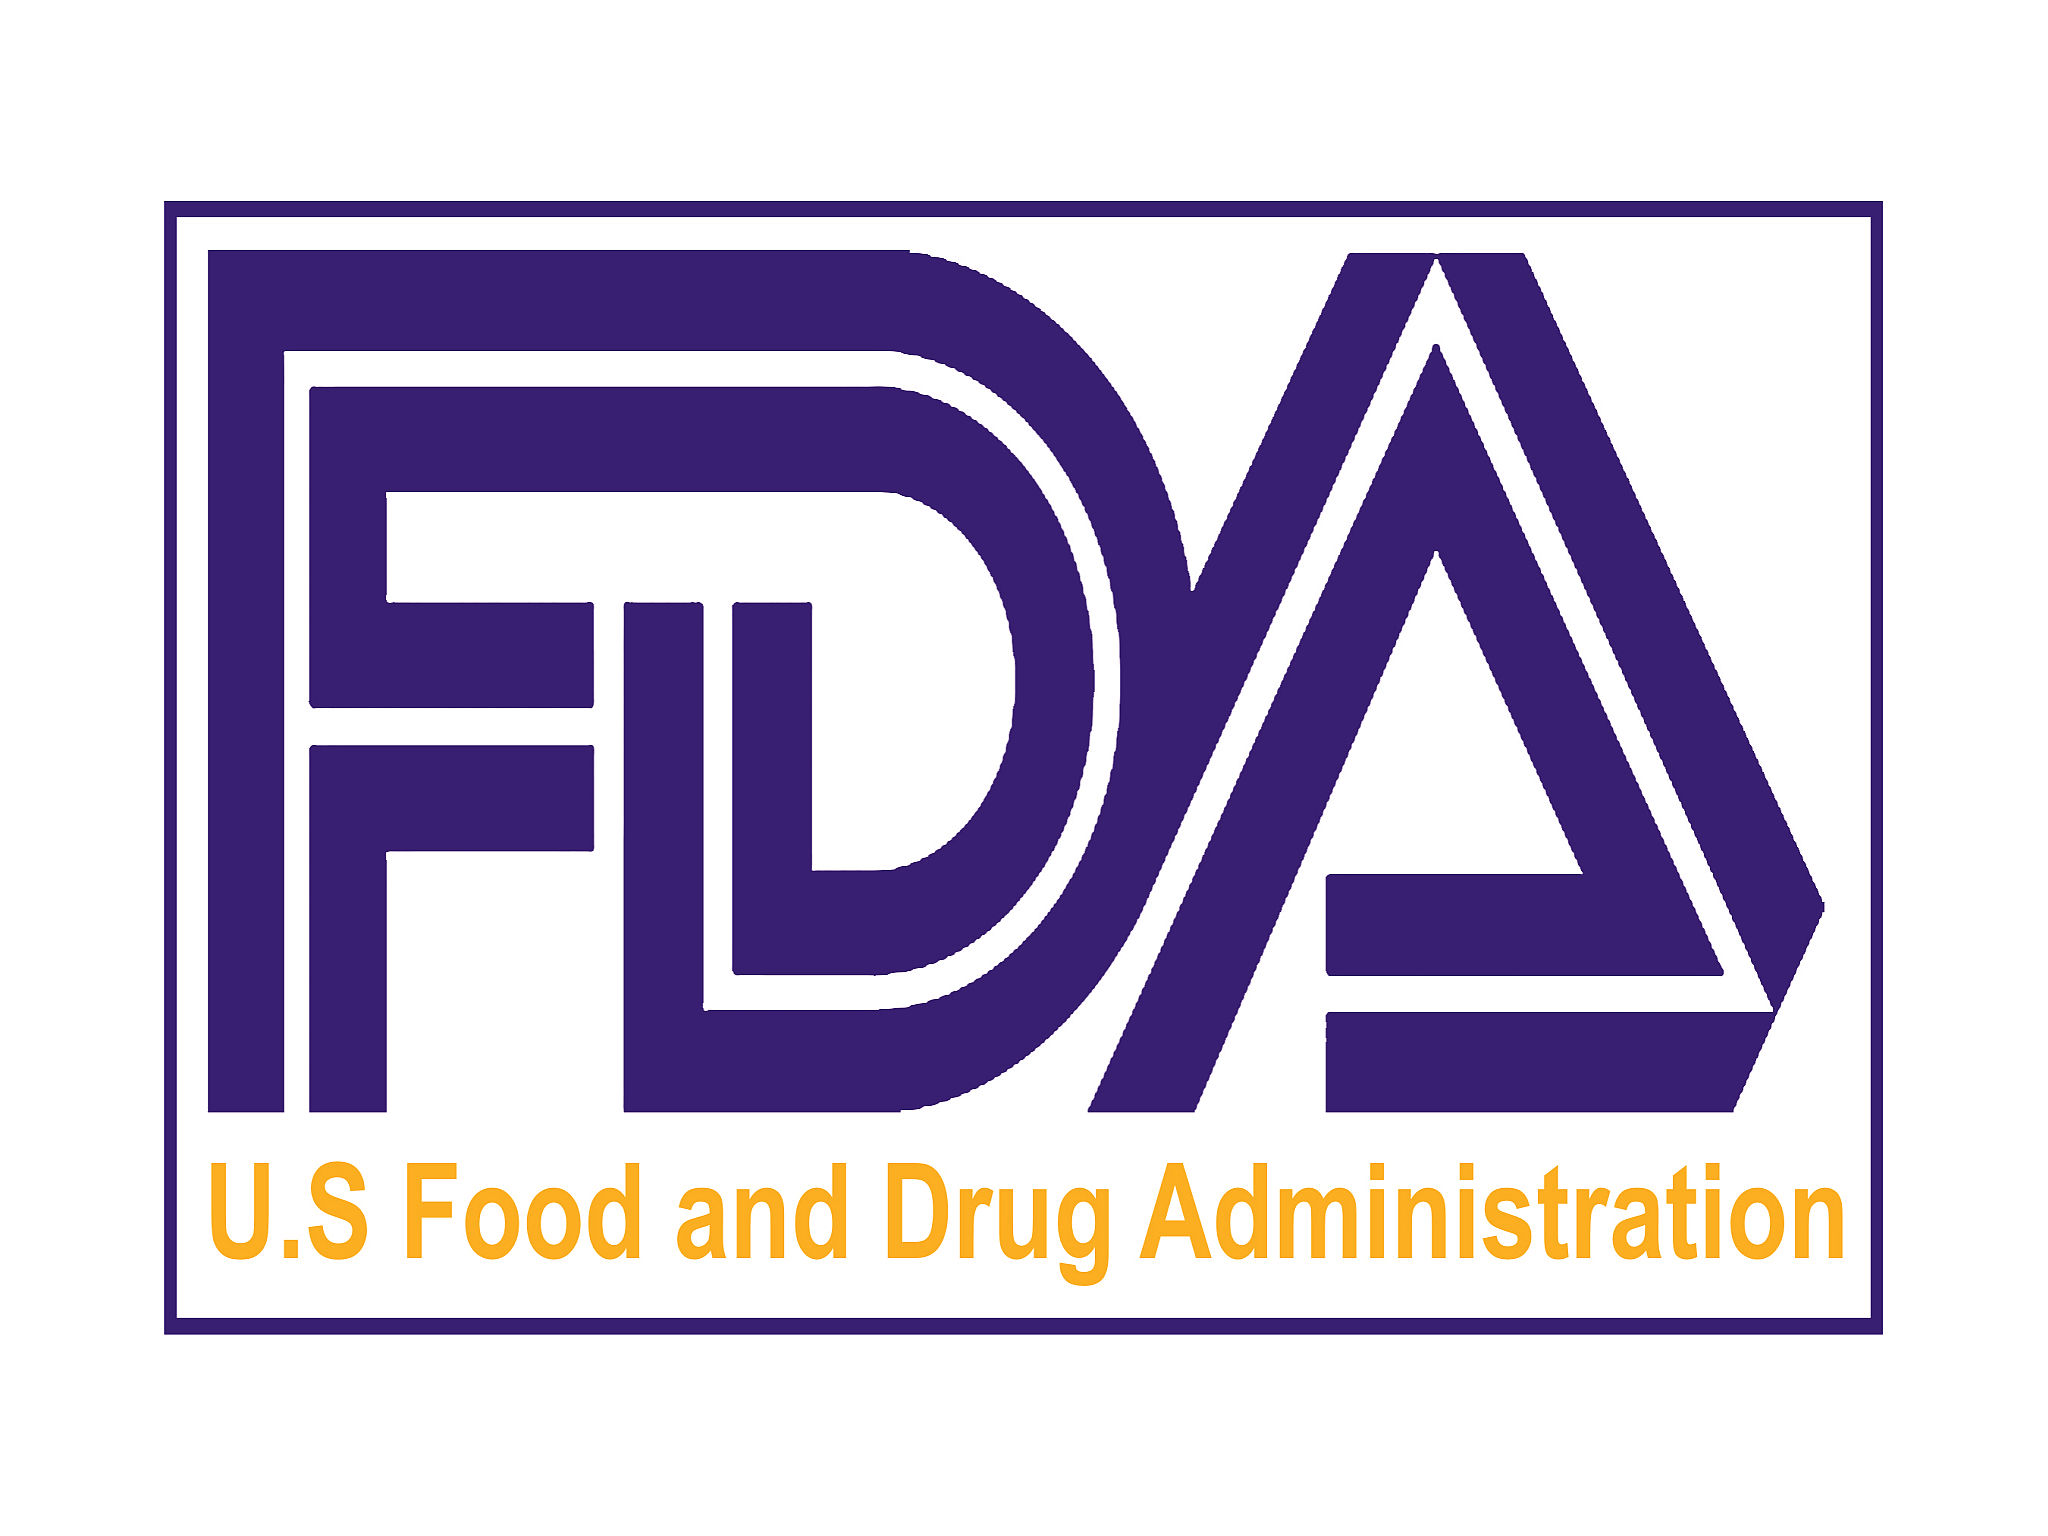 The US FDA Establishment Identifier (FEI) number